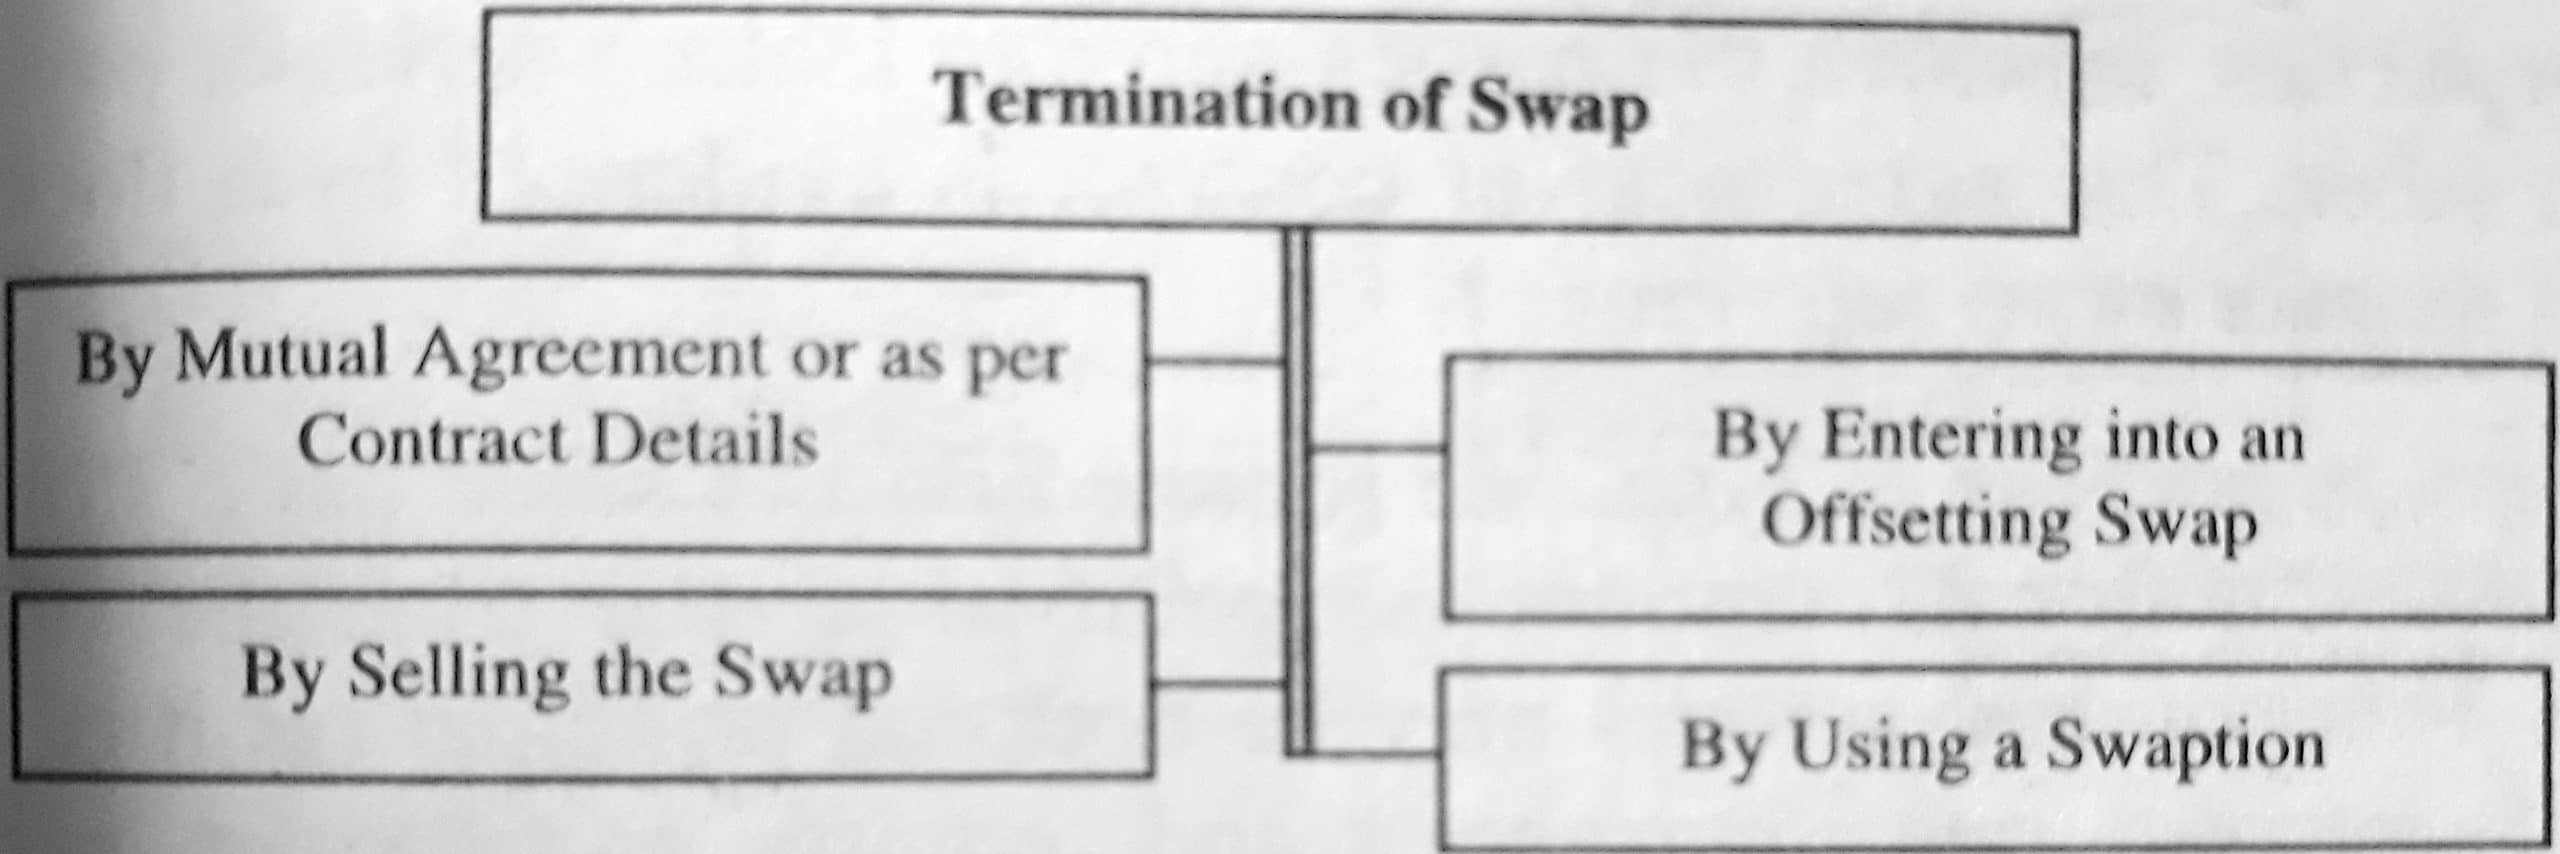 Termination of Swap